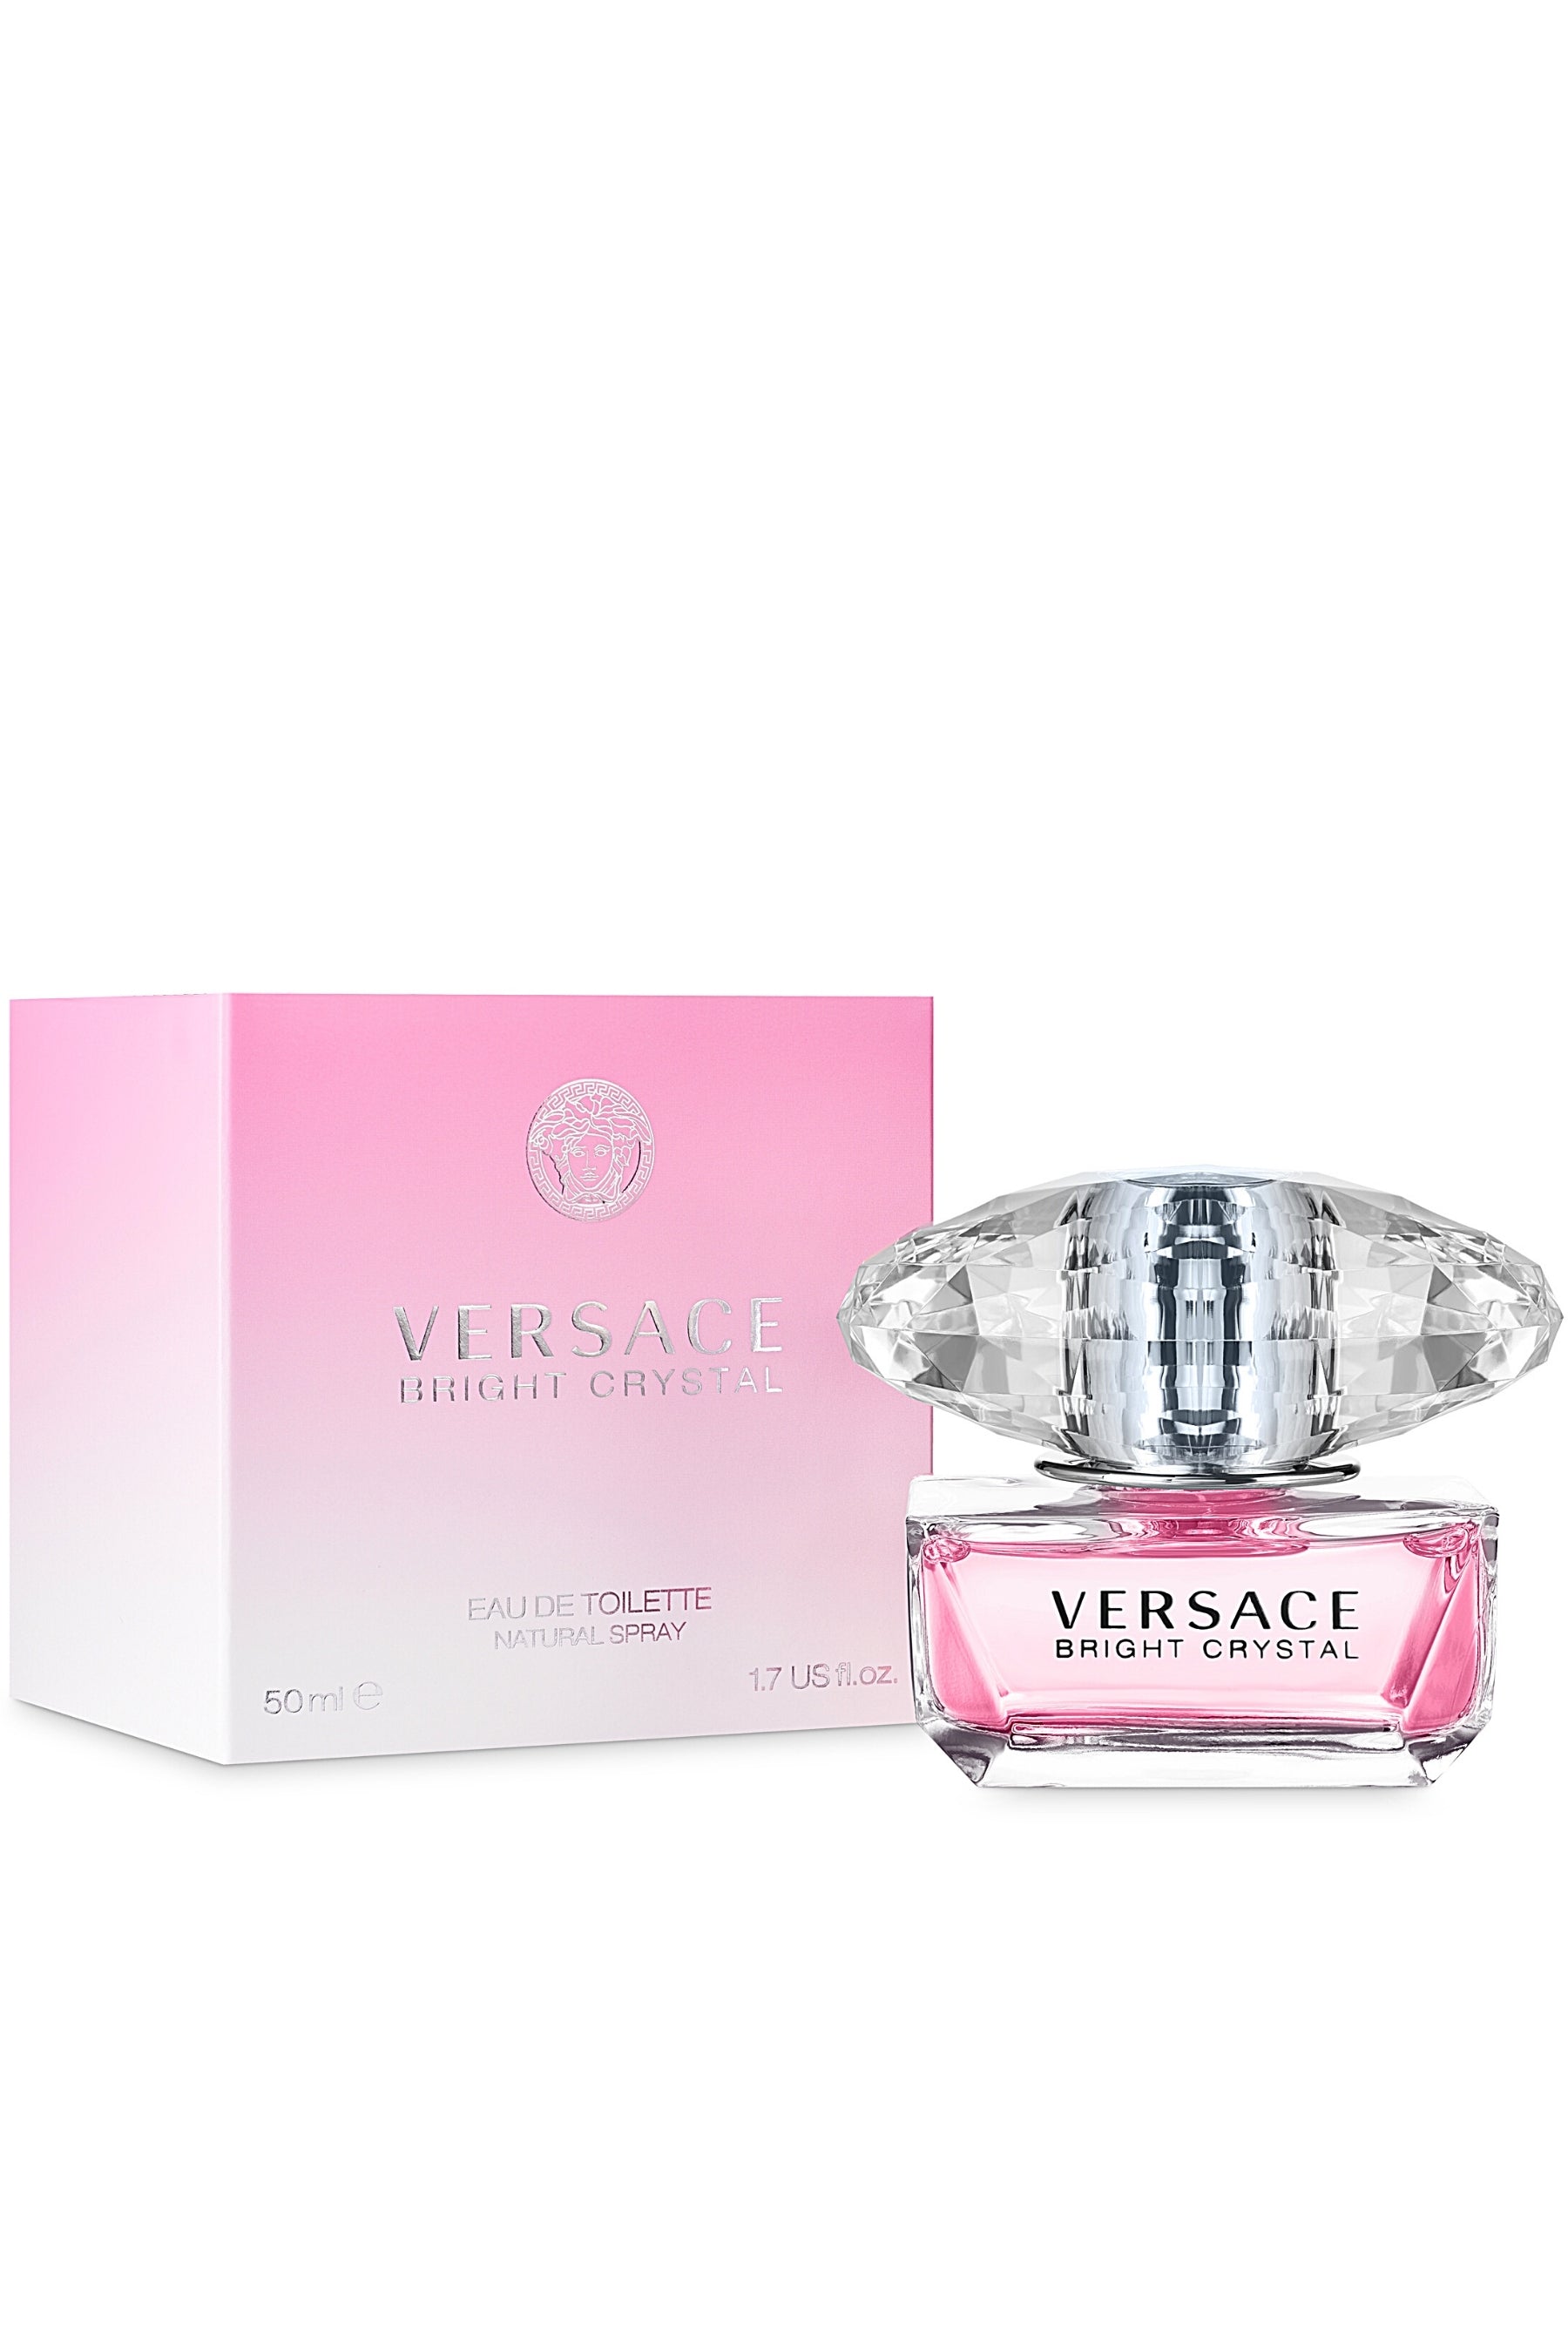 Versace Women's Eau De Toilette Spray, Bright Crystal - 1.7 fl oz bottle